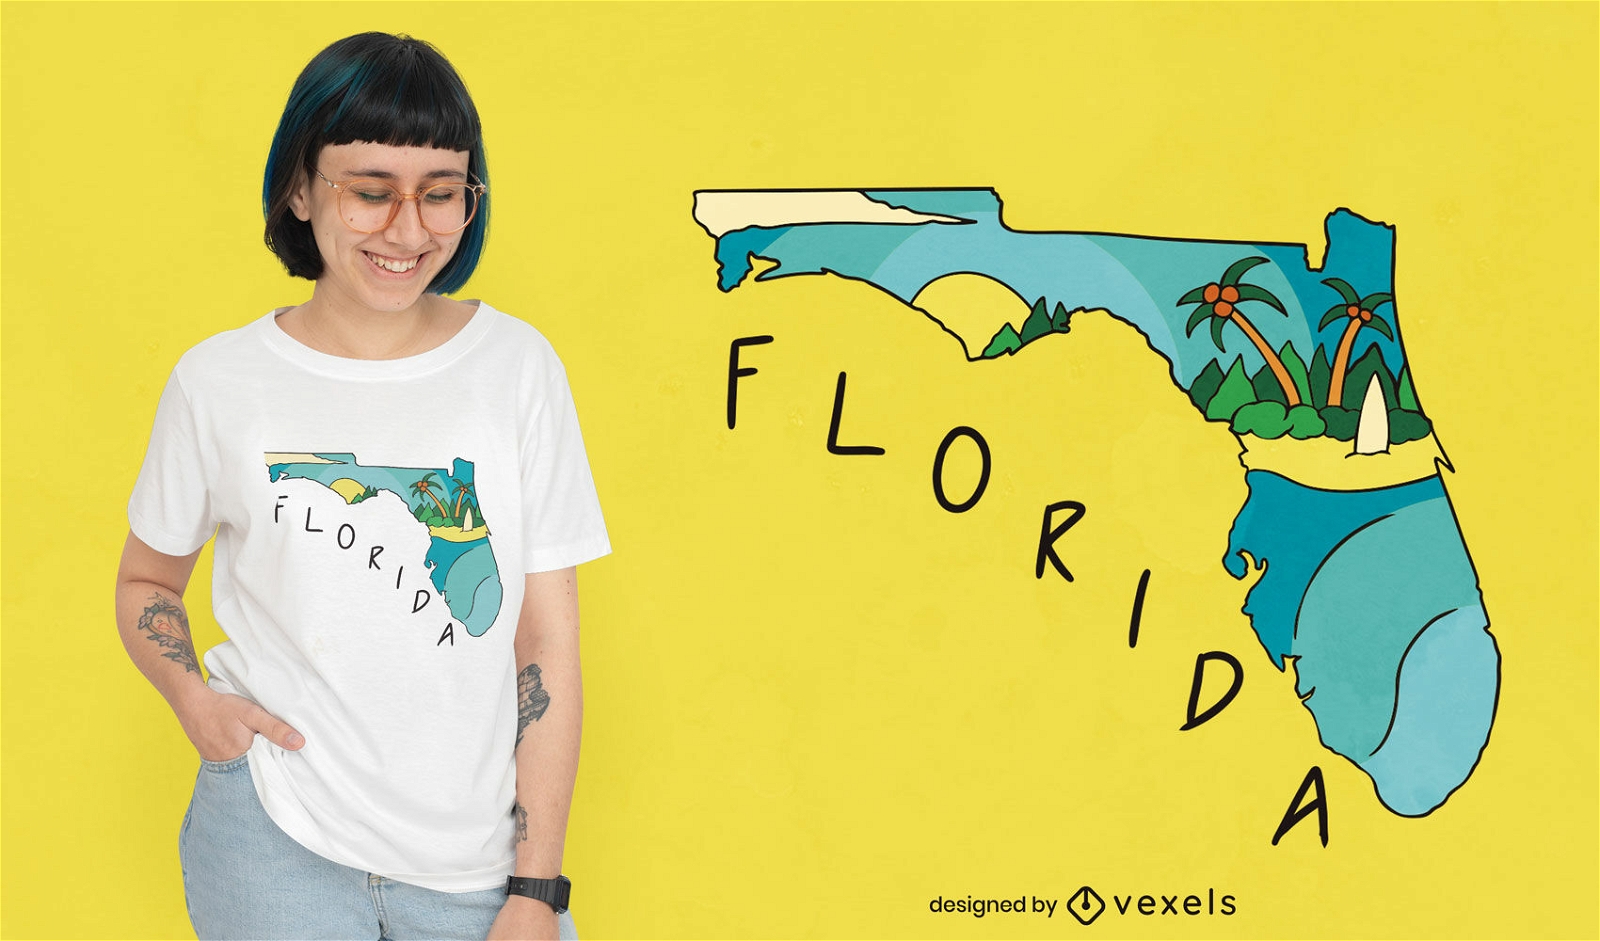 Florida USA state map t-shirt design